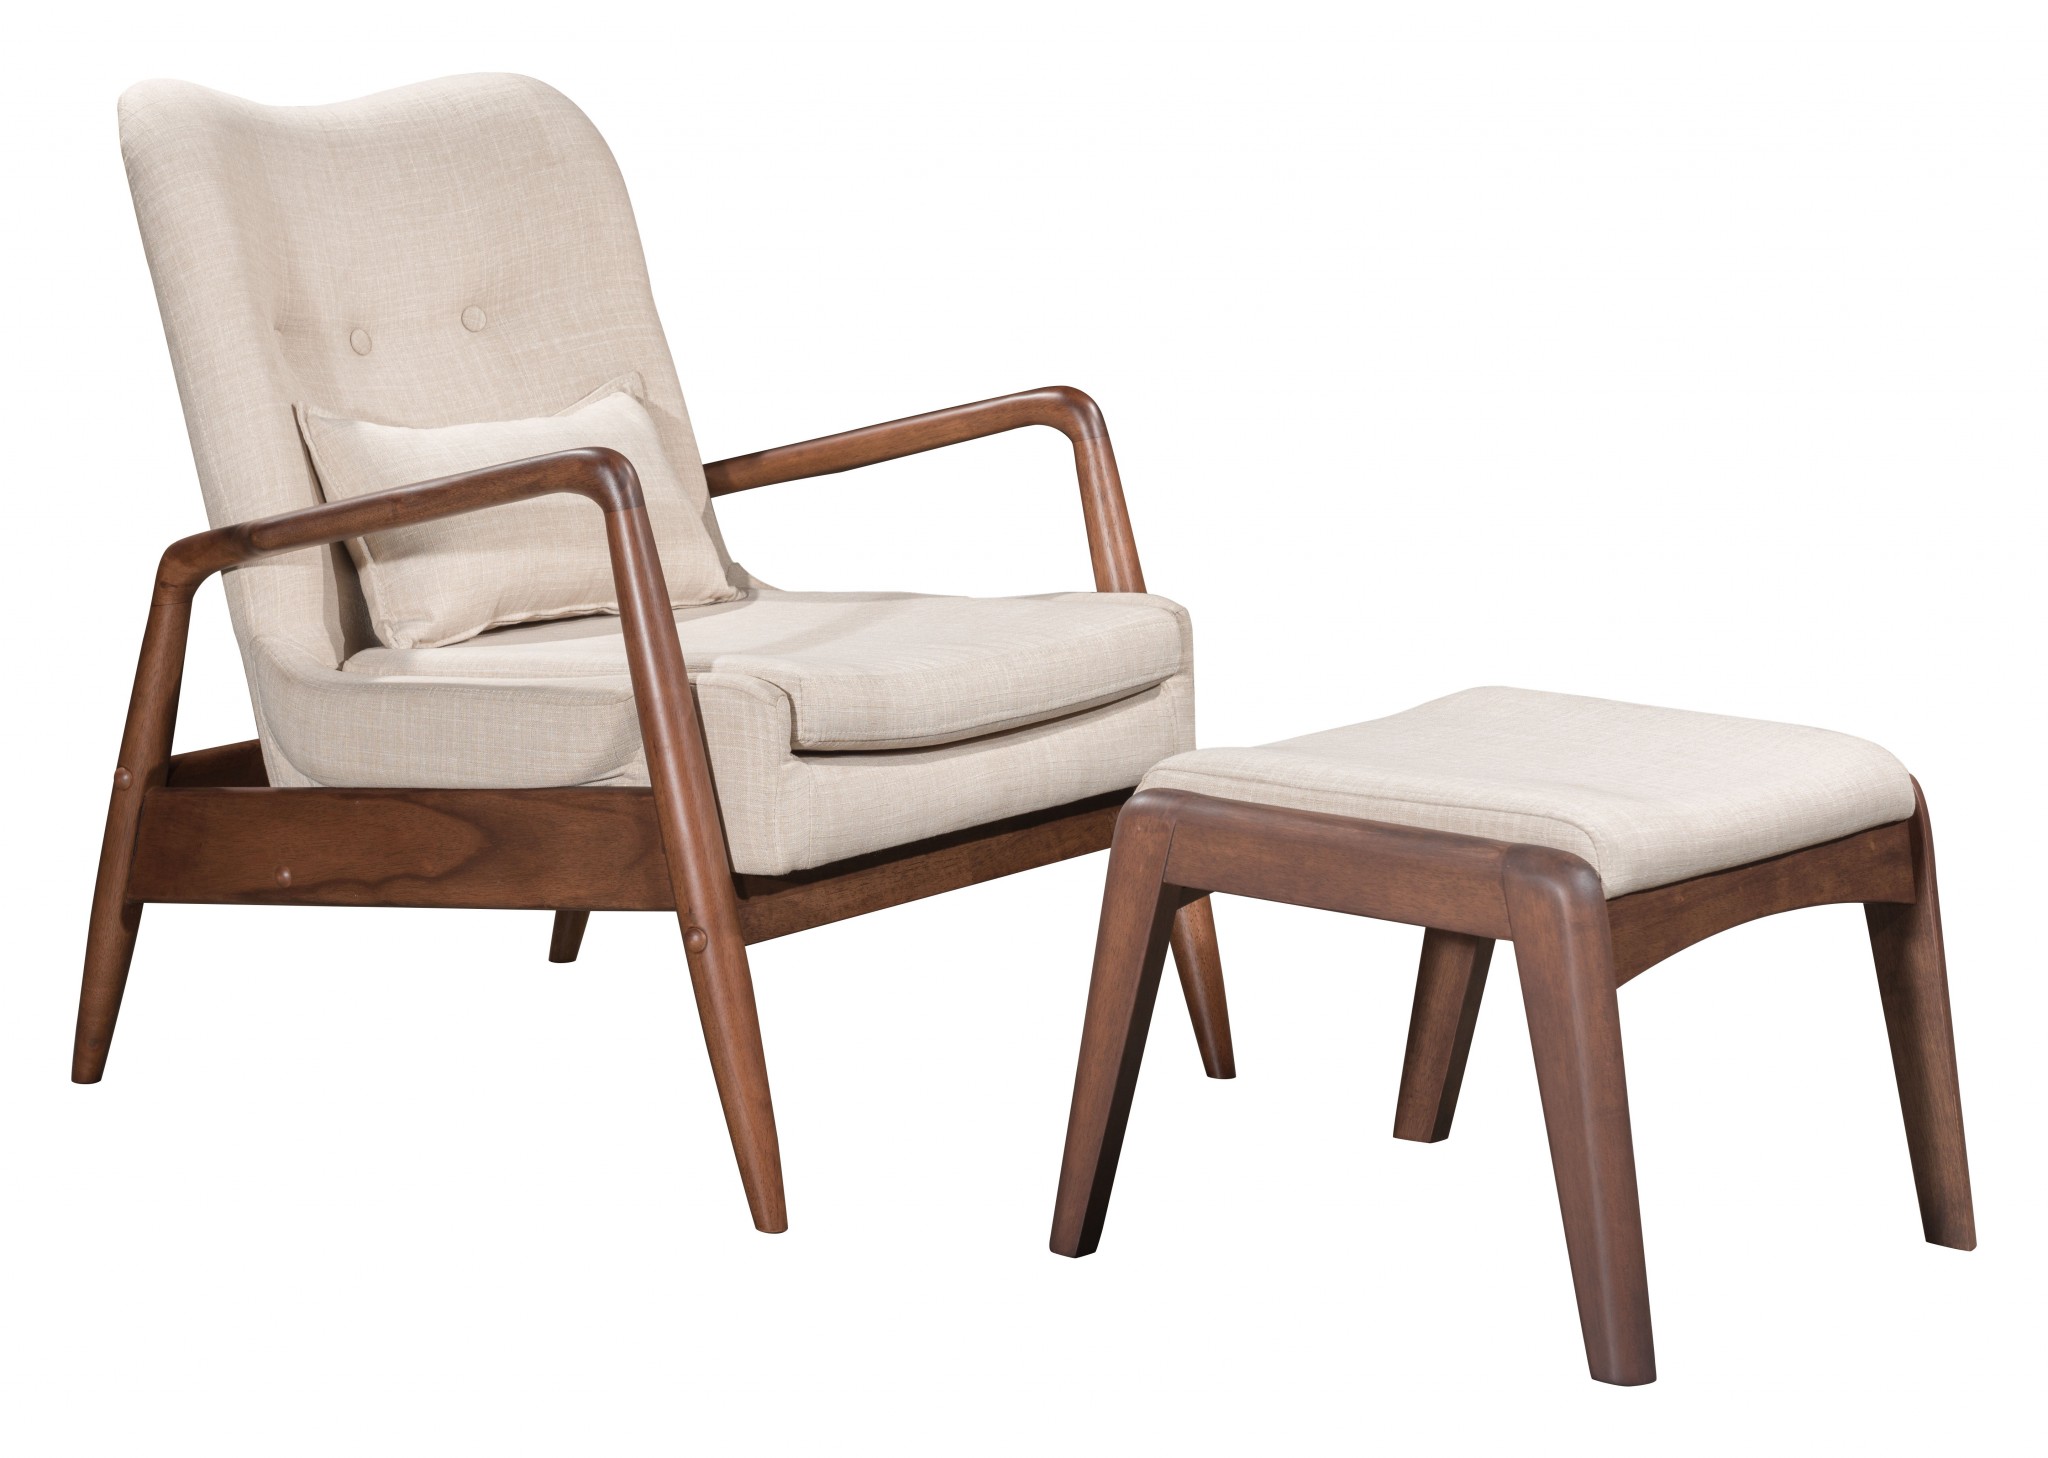 Walnut and Beige Linen Look Modern Retro Chair and Ottoman Set